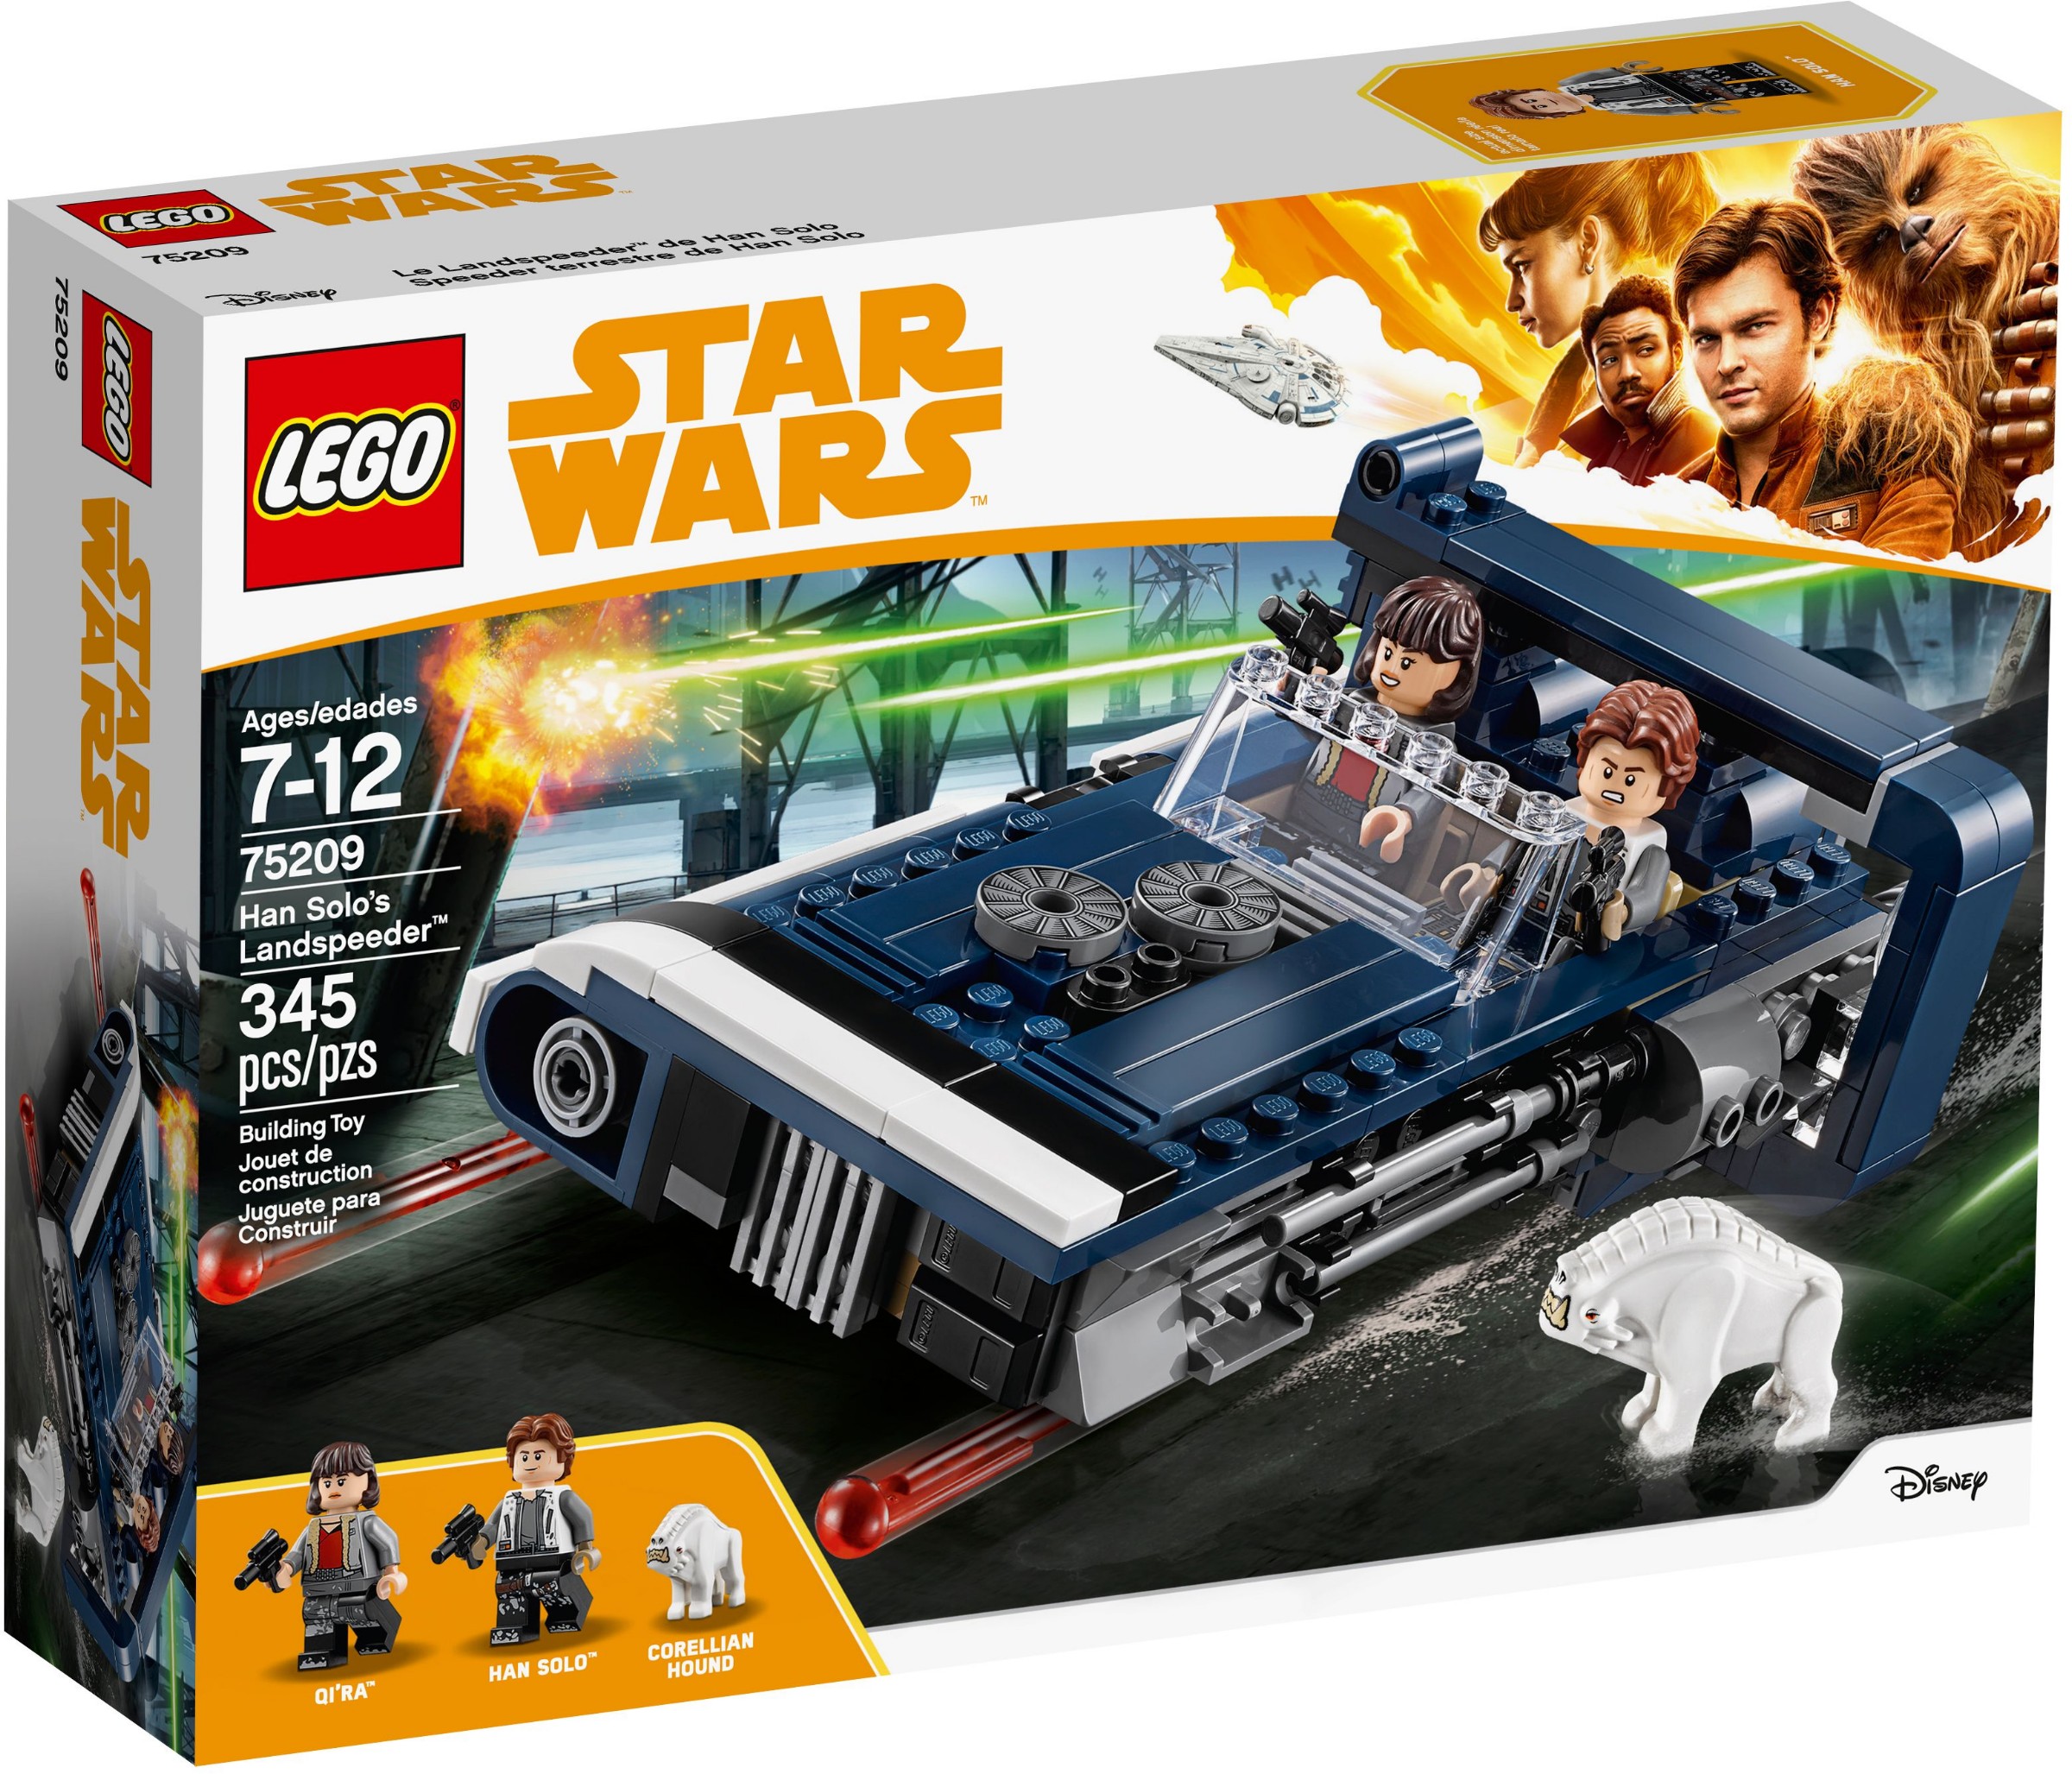 Lego 75219 Imperial AT-Hauler - Set Lego Star Wars pas cher